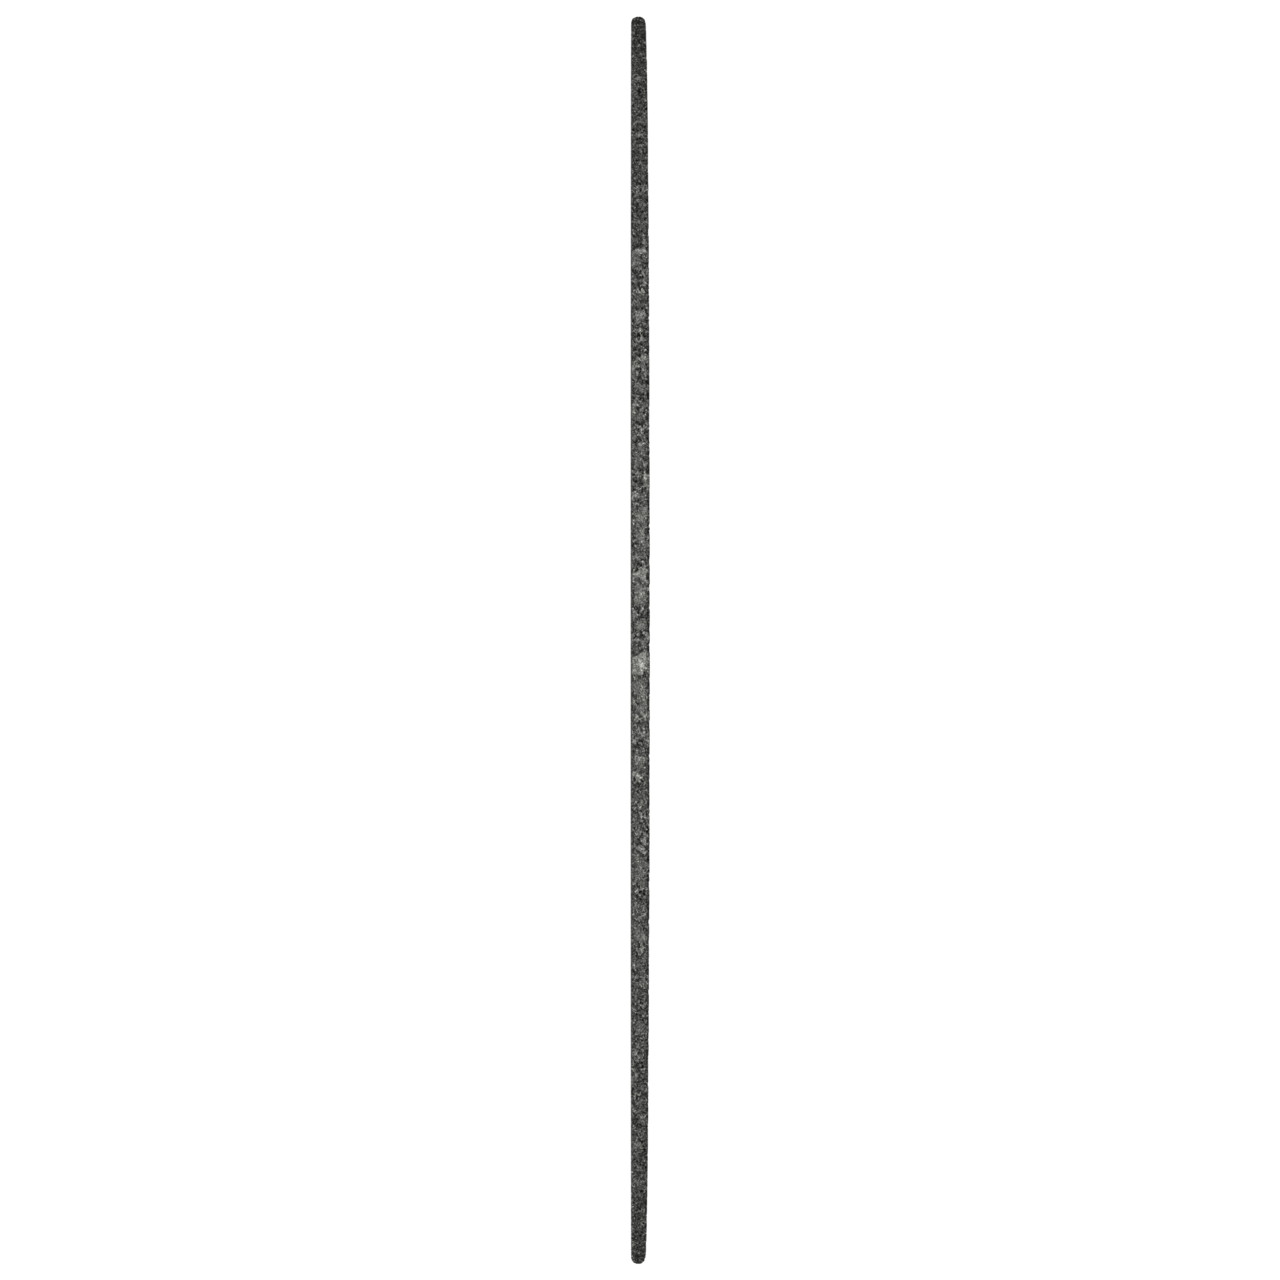 Dischi da taglio Tyrolit DxDxH 75x2x10 Per acciaio inox, forma: 41 - versione diritta, Art. 325219